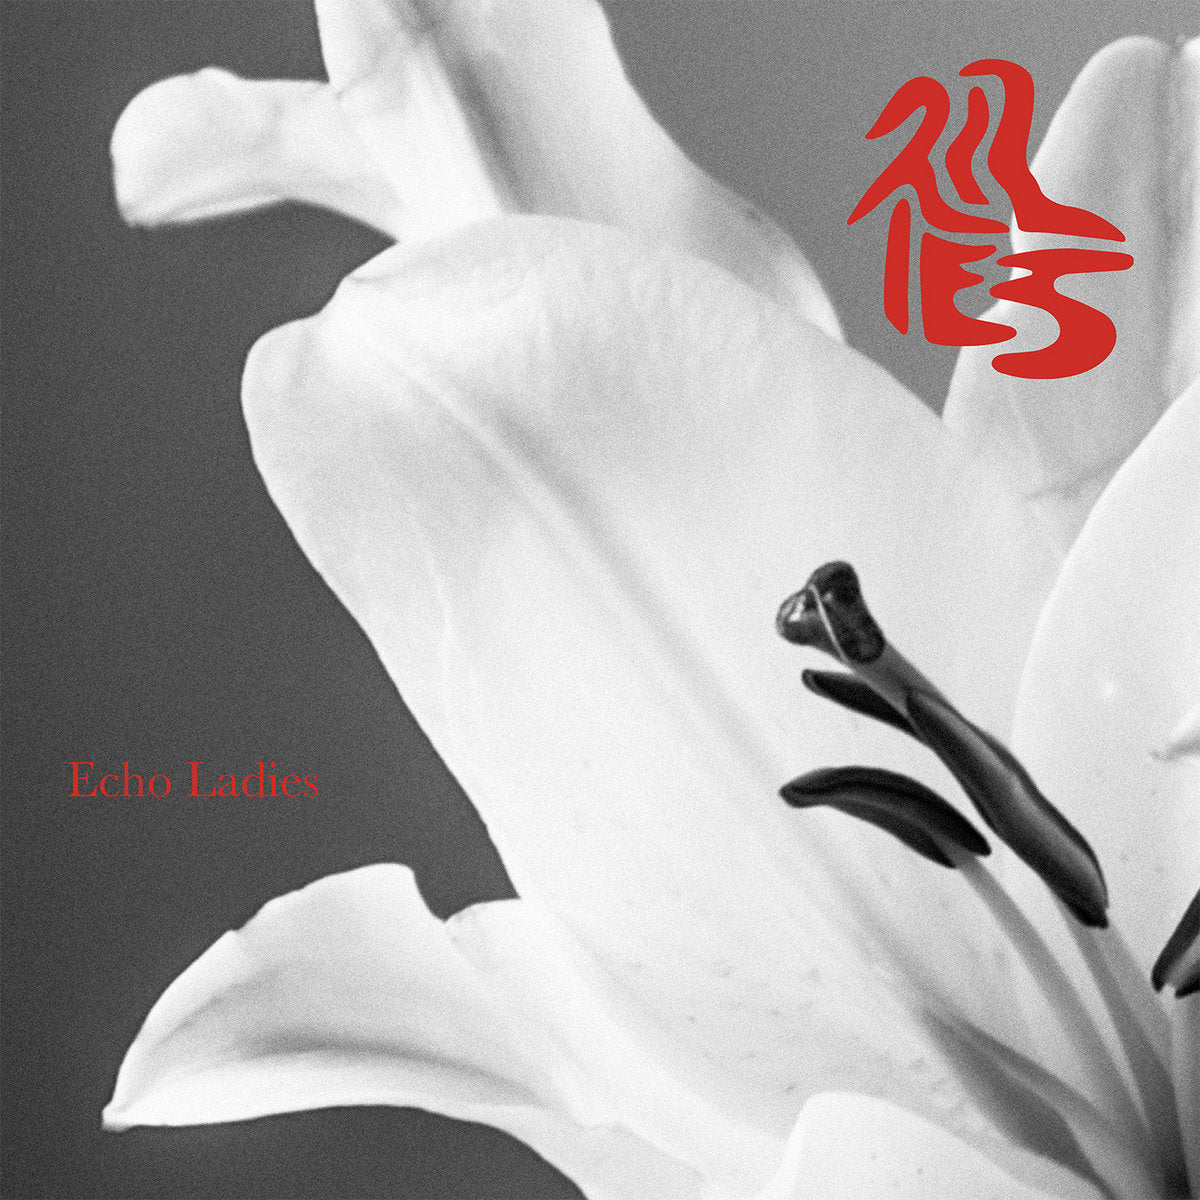 Echo Ladies "Lilies" [Silver Vinyl]